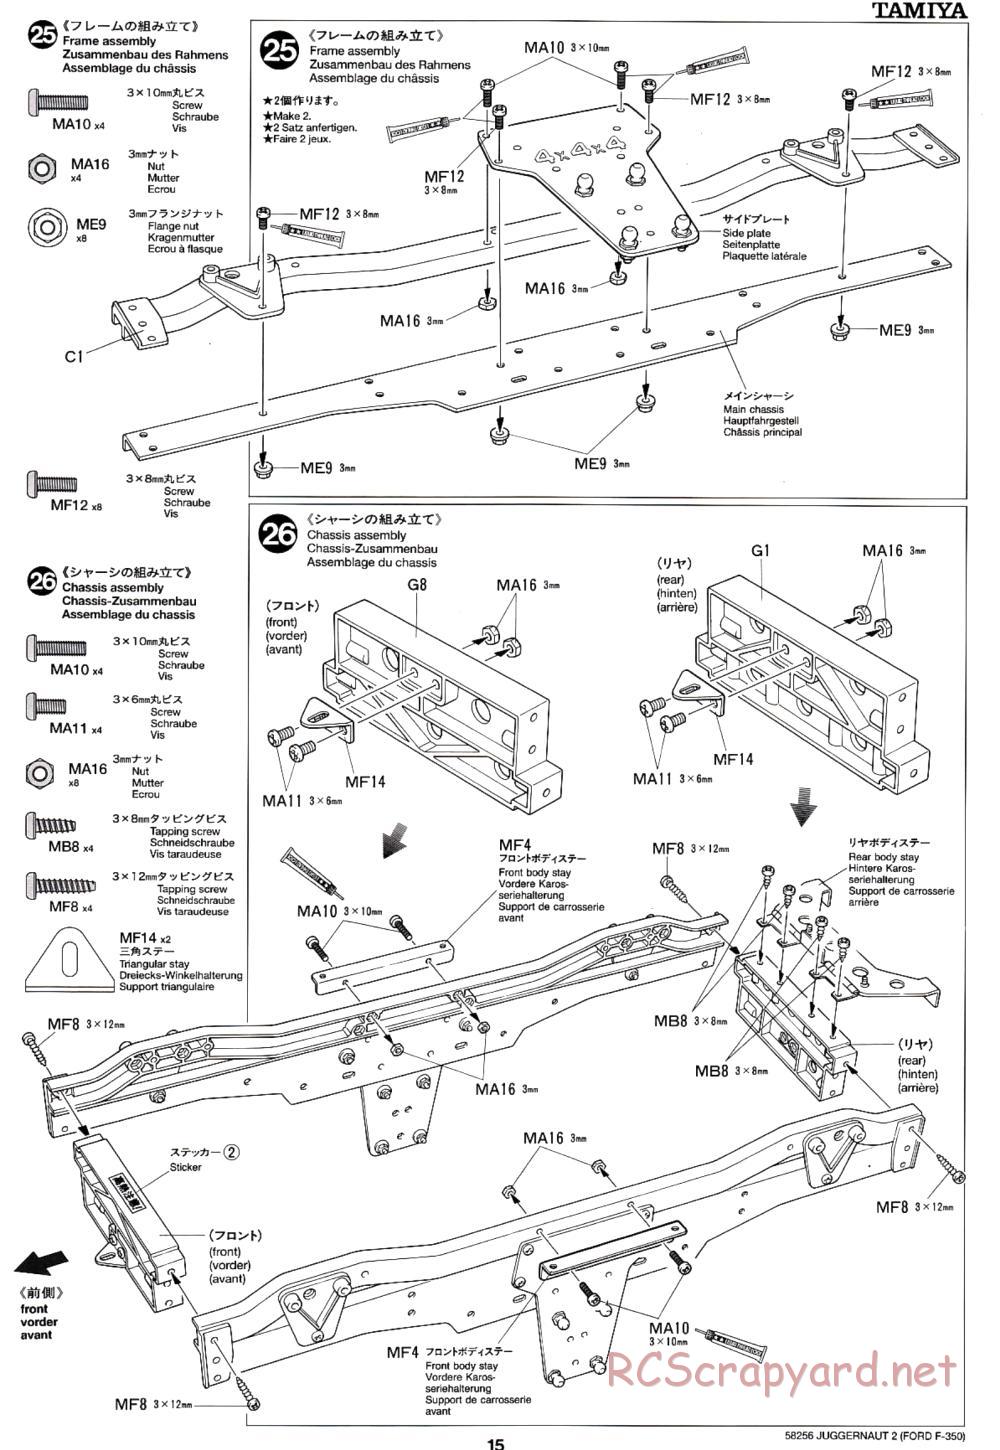 Tamiya - Juggernaut 2 Chassis - Manual - Page 15